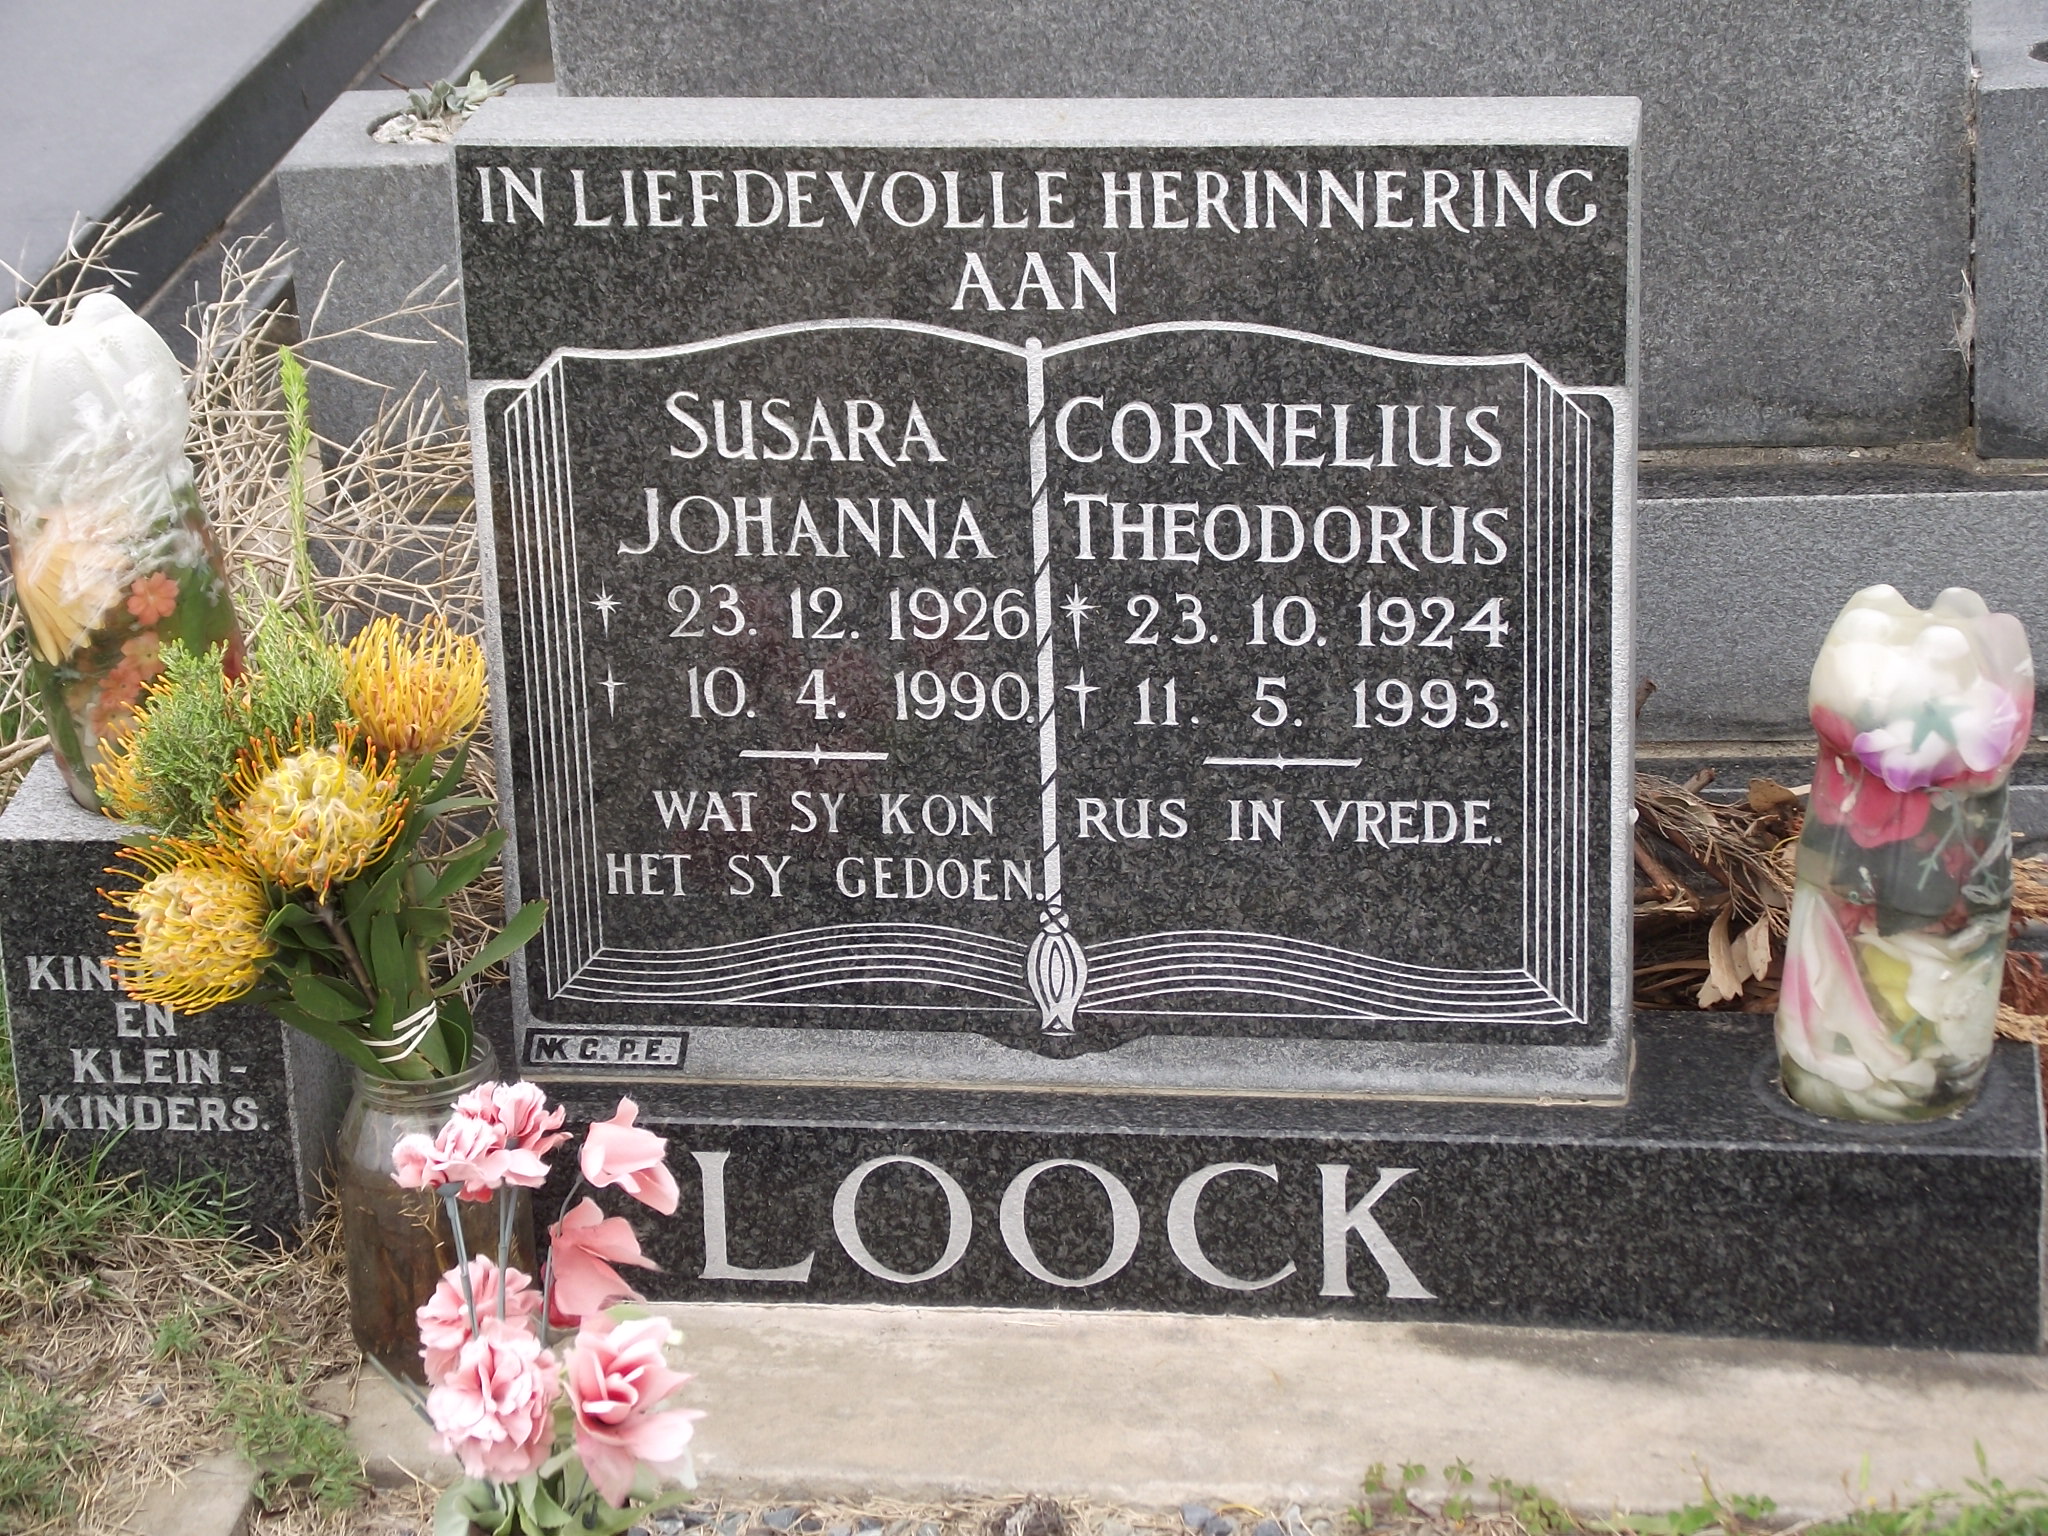 LOOCK Cornelius Theodorus 1924-1993 & Susara Johanna 1926-1990